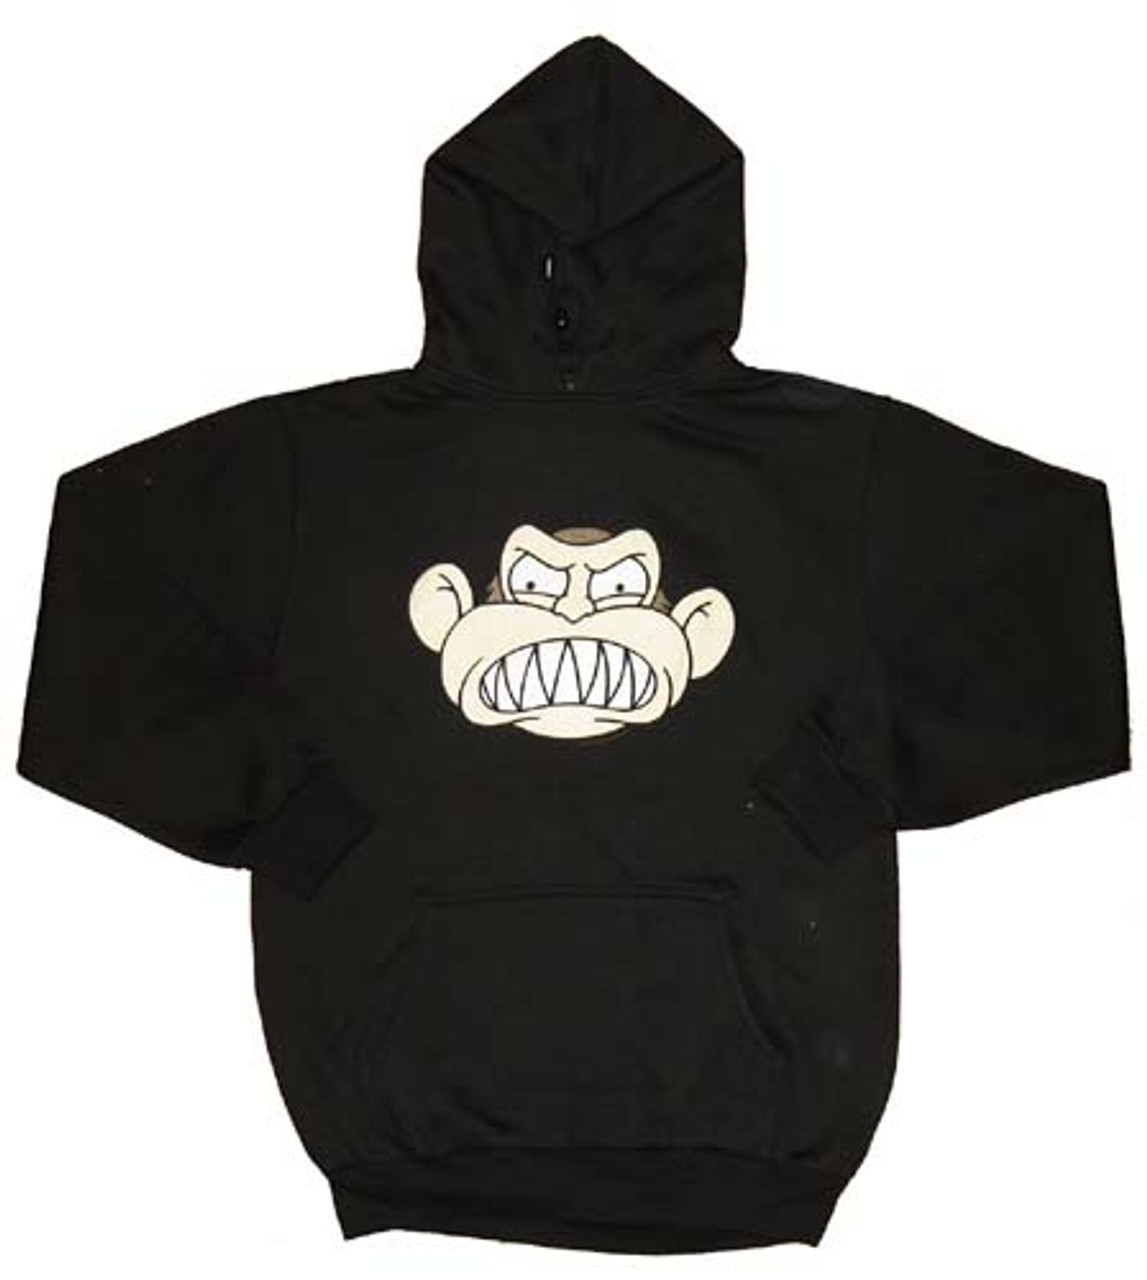 family guy evil monkey hoodies 3 58012.1 - Family Guy Shop